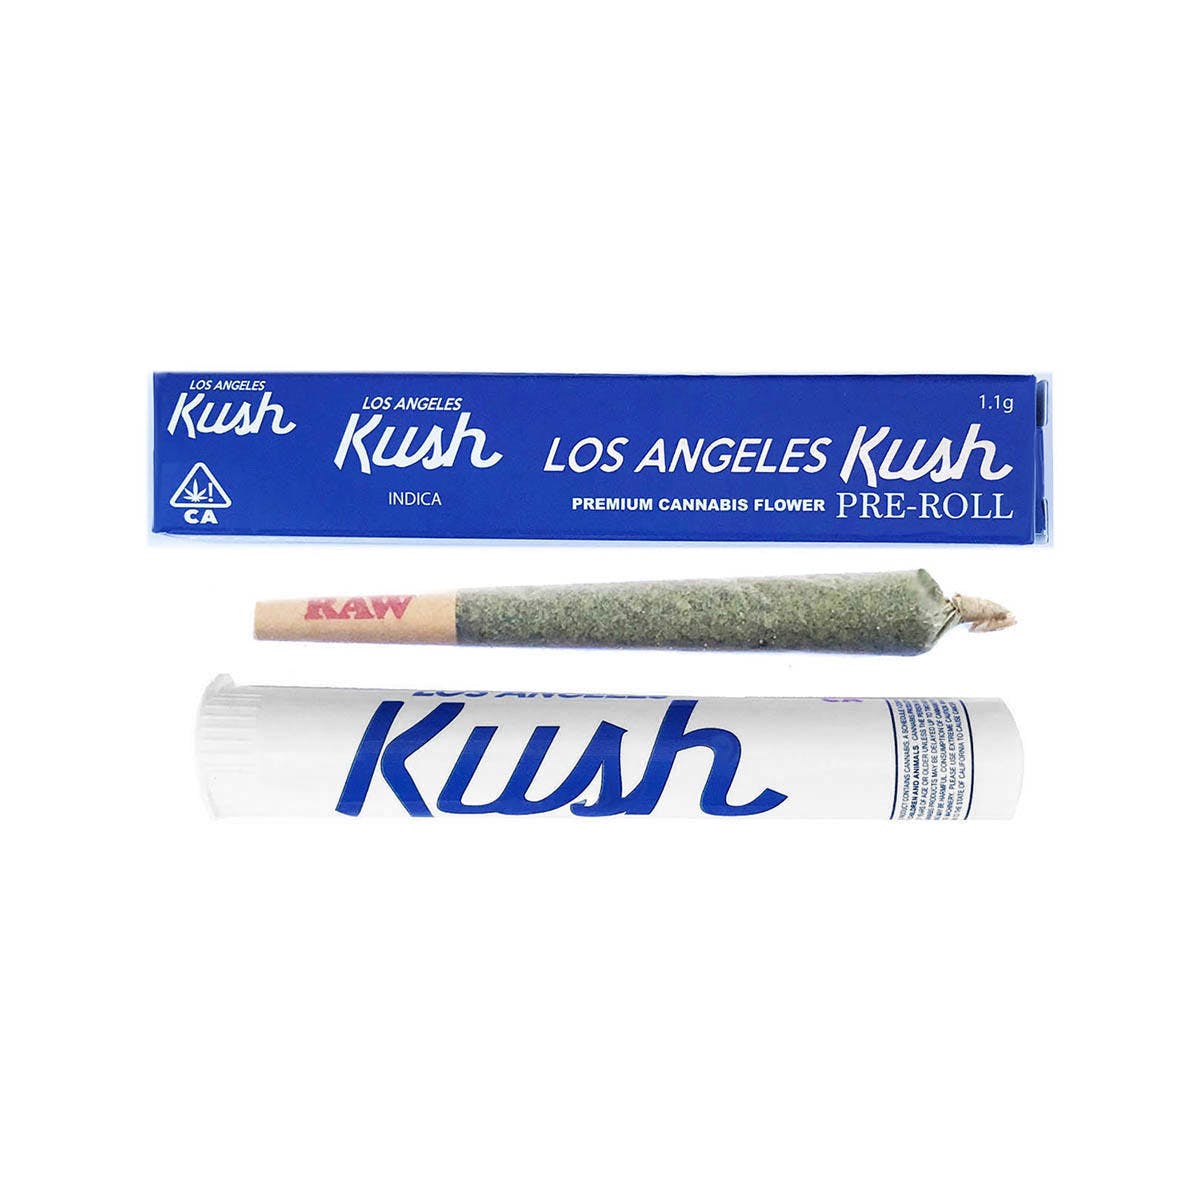 marijuana-dispensaries-25cap-van-nuys-solutions-in-van-nuys-los-angeles-kush-lak-pre-roll-1g